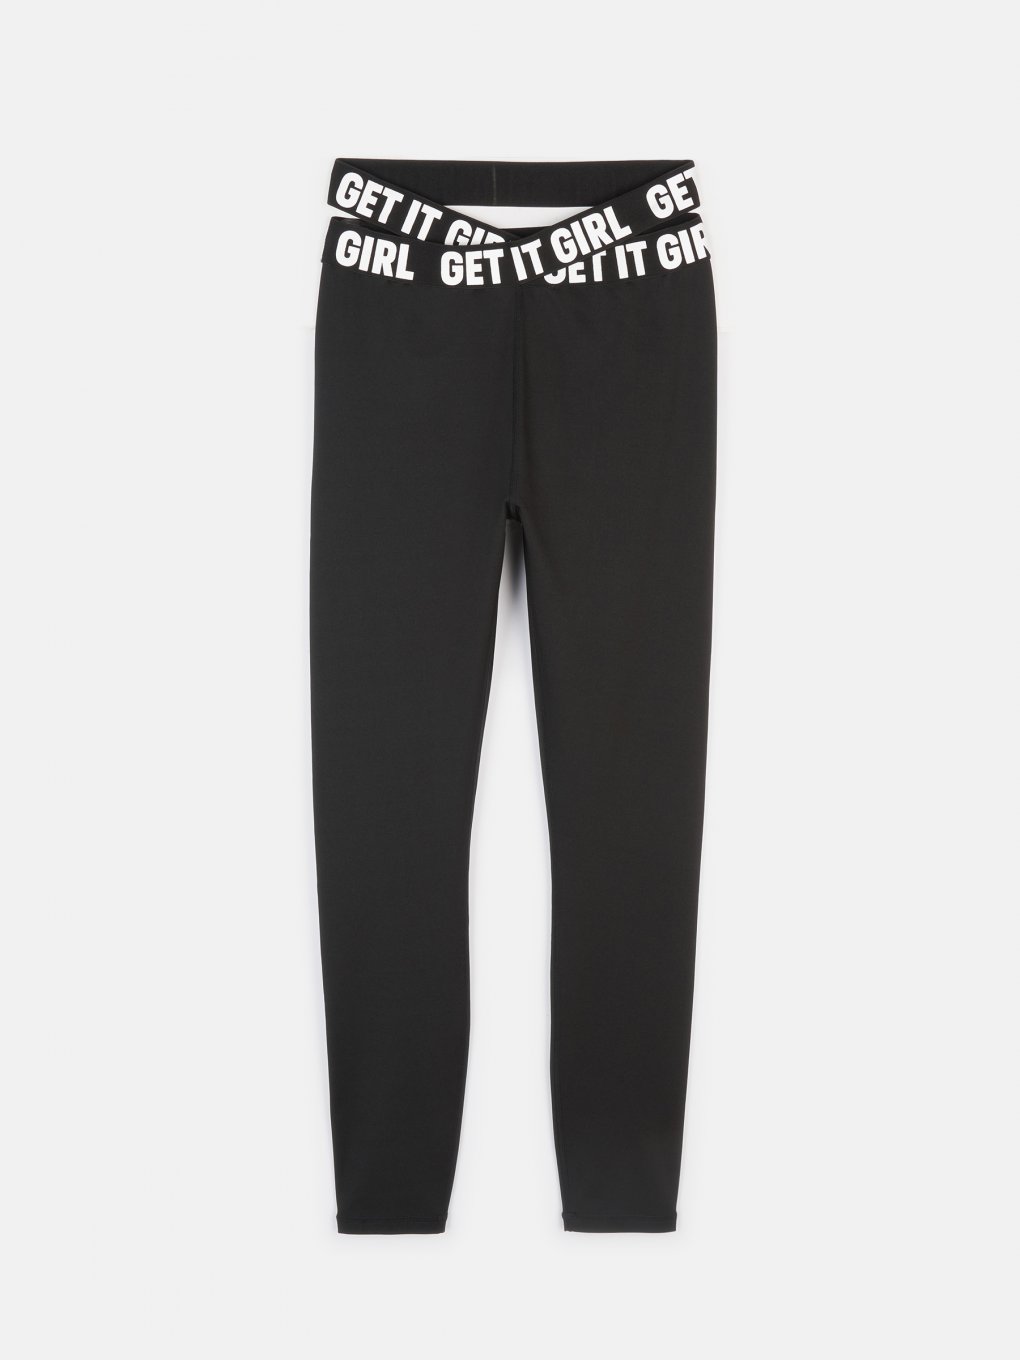 Sport leggings with slogan print on waistband